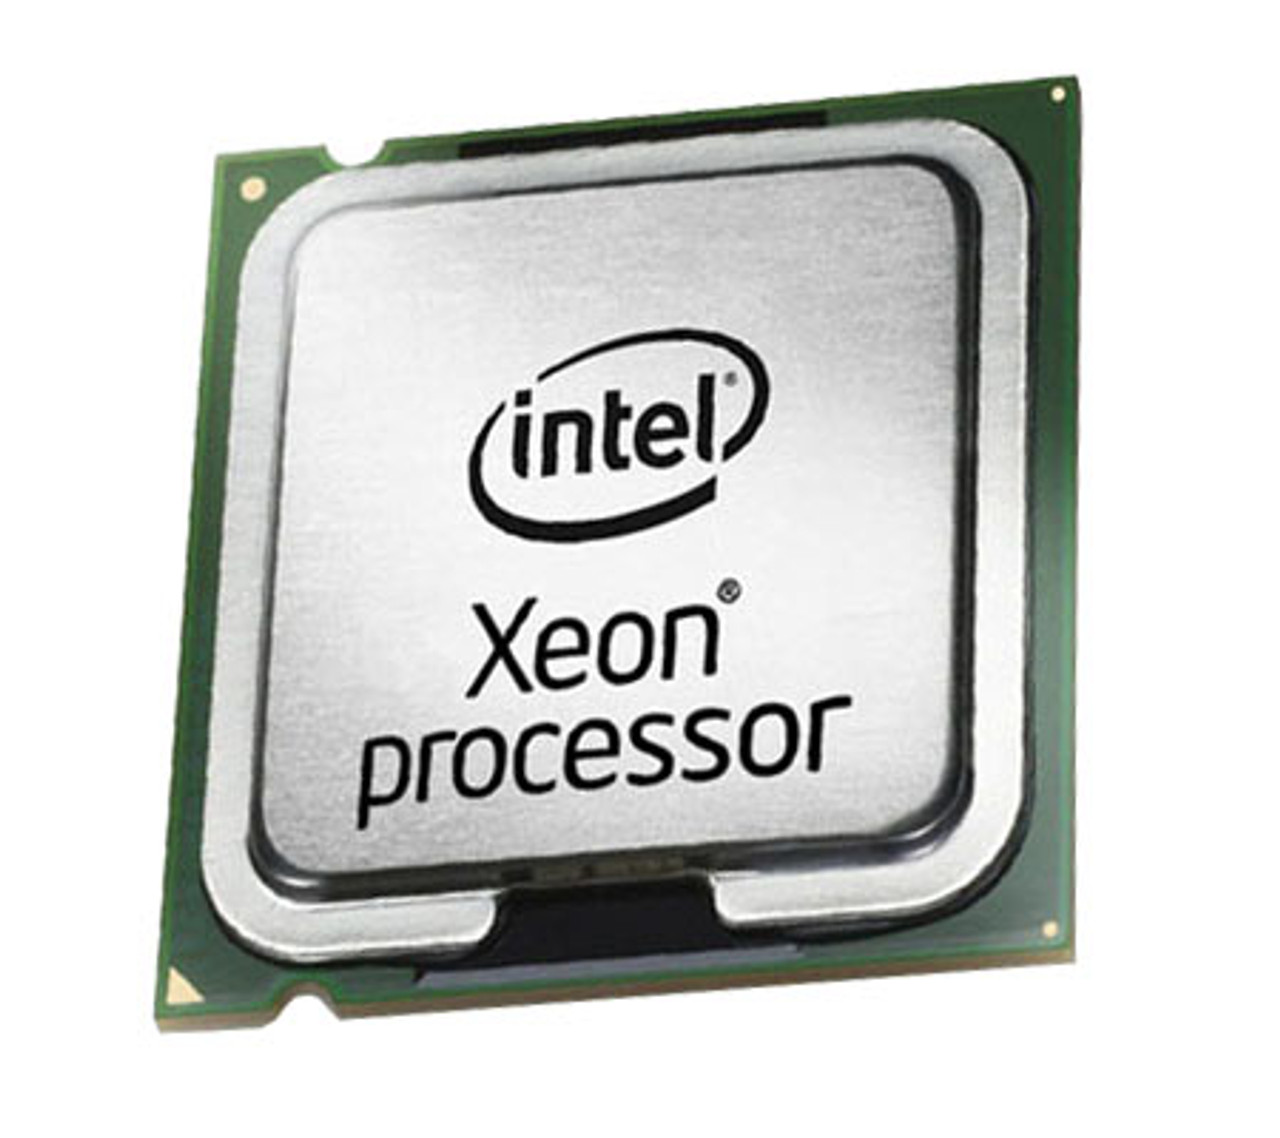 SLANF Intel Xeon E5220 Dual-Core 2.33GHz 1333MHz FSB 6MB L2 Cache Socket LGA771 Processor